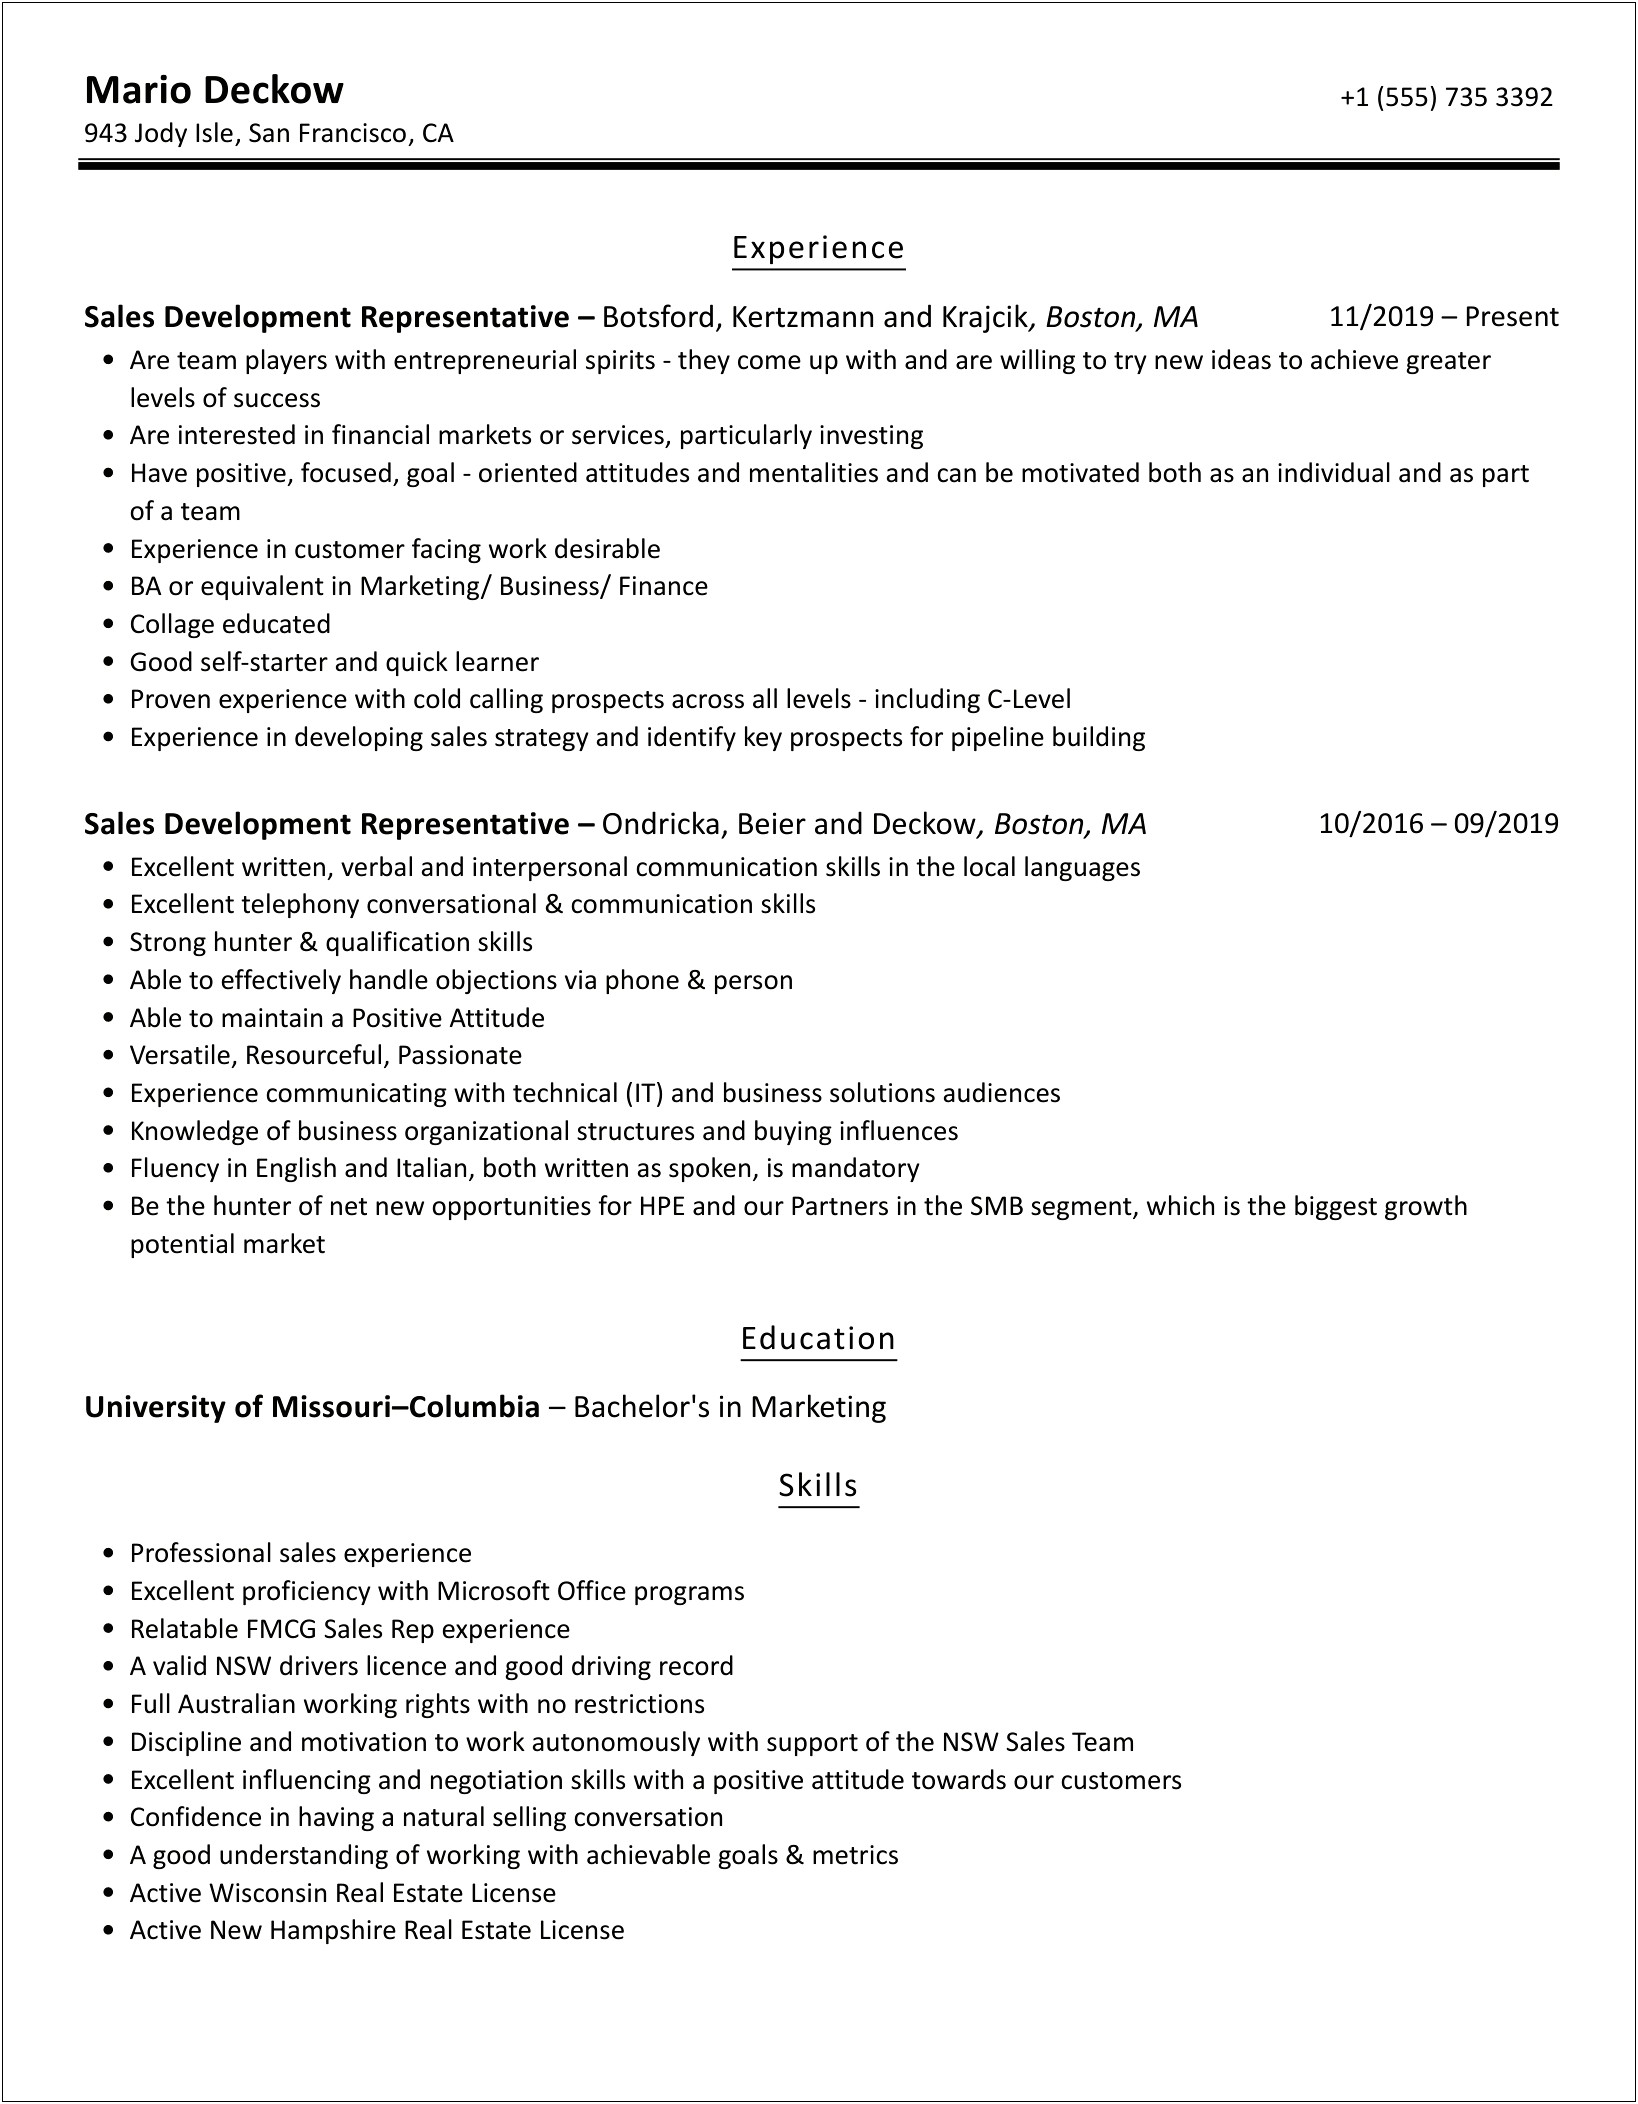 Sales Development Representative Job Description For Resume